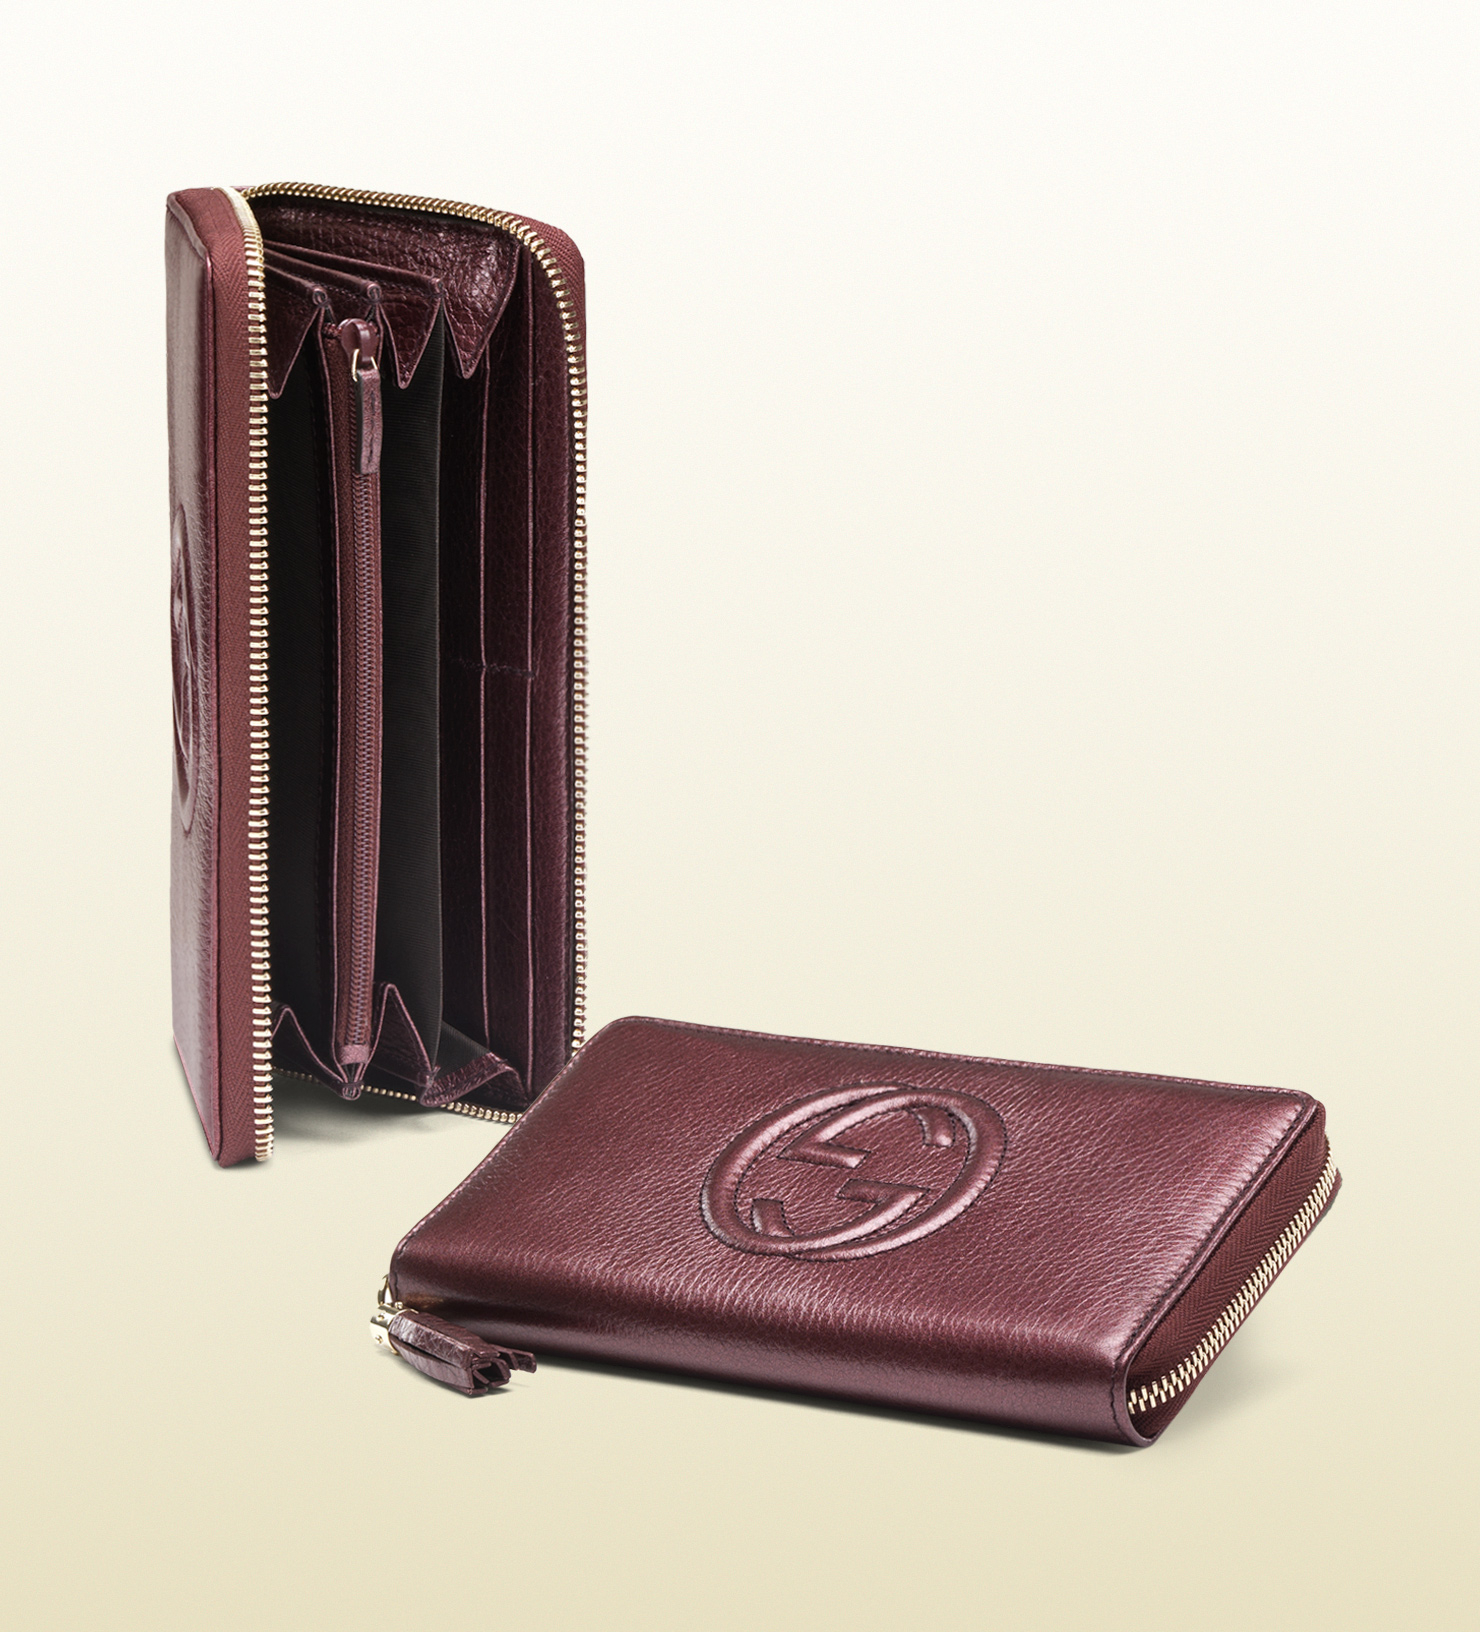 Gucci Soho Metallic Leather Zip Around Wallet in Burgundy (Red) for Men - Lyst